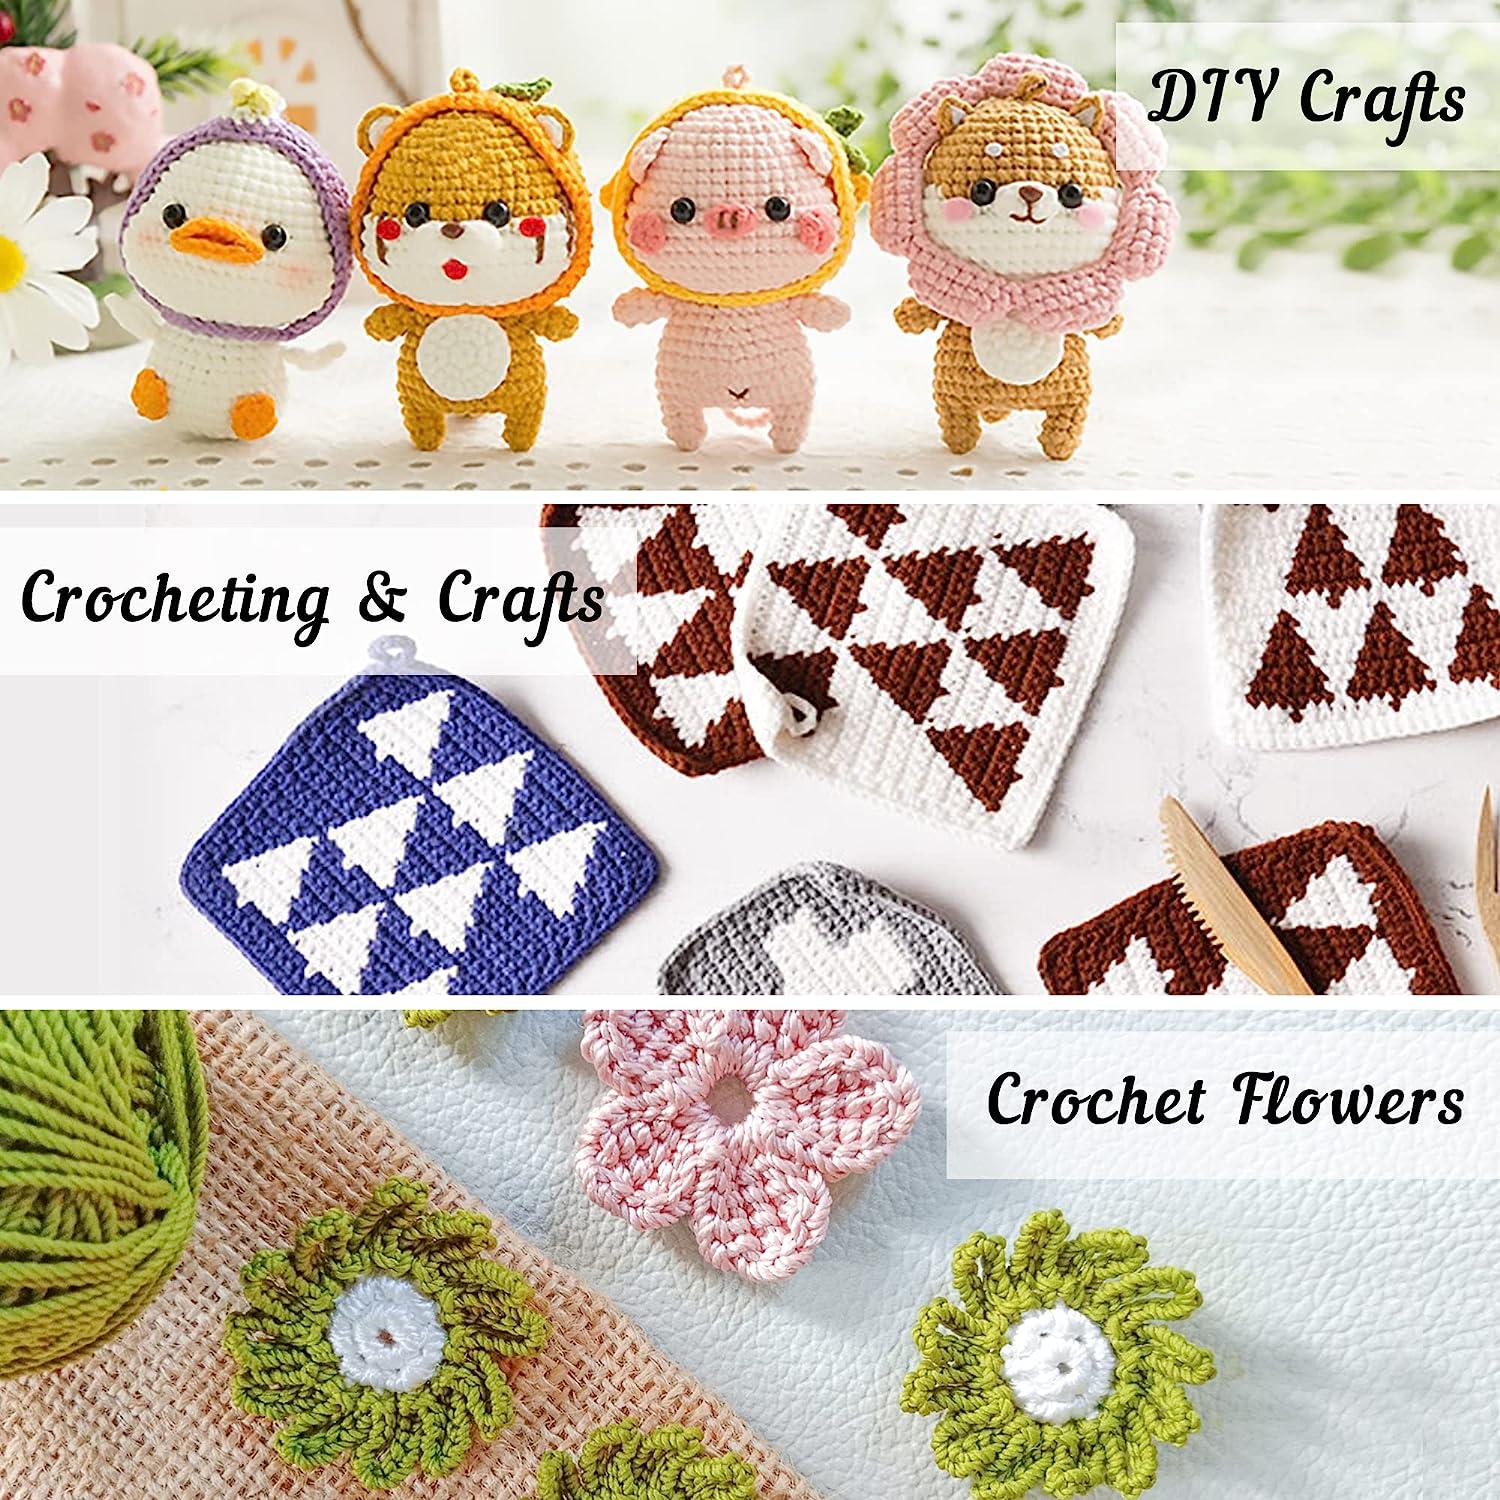  SEWACC 1 Set Yarn Needles for Knitting Crochet Flowers